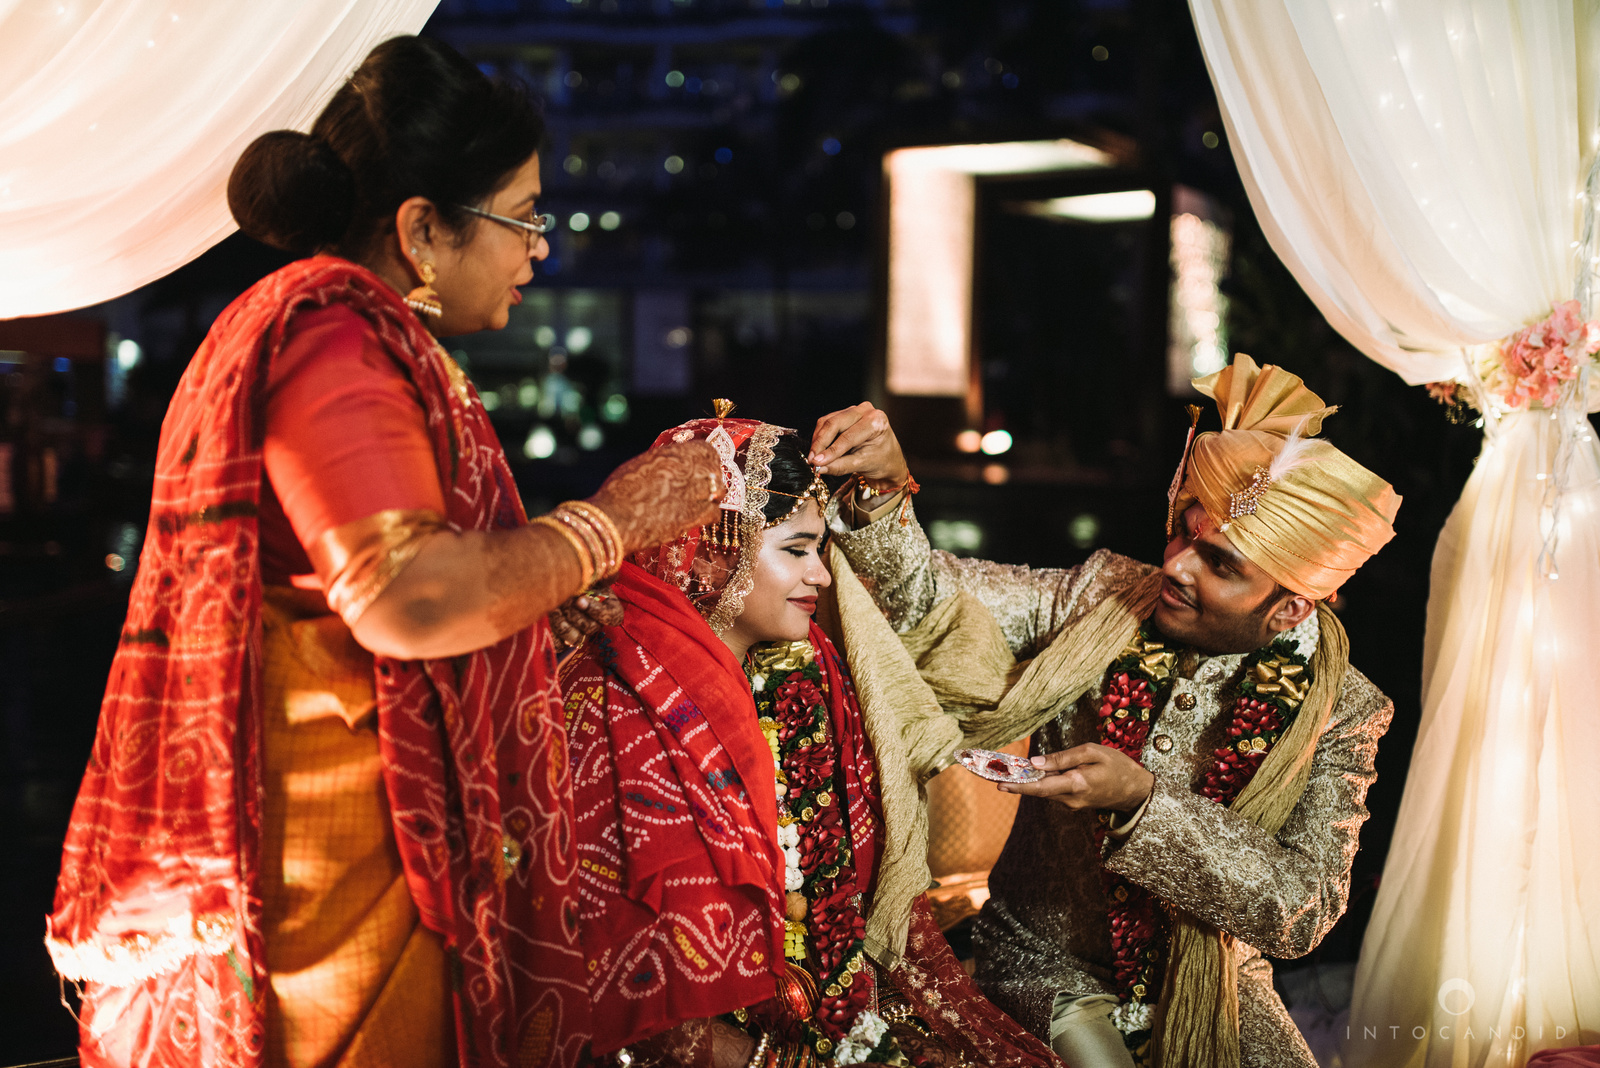 mumbai_wedding_photographer_intocandid_saharastar_ketan_manasvi_ts_031.jpg